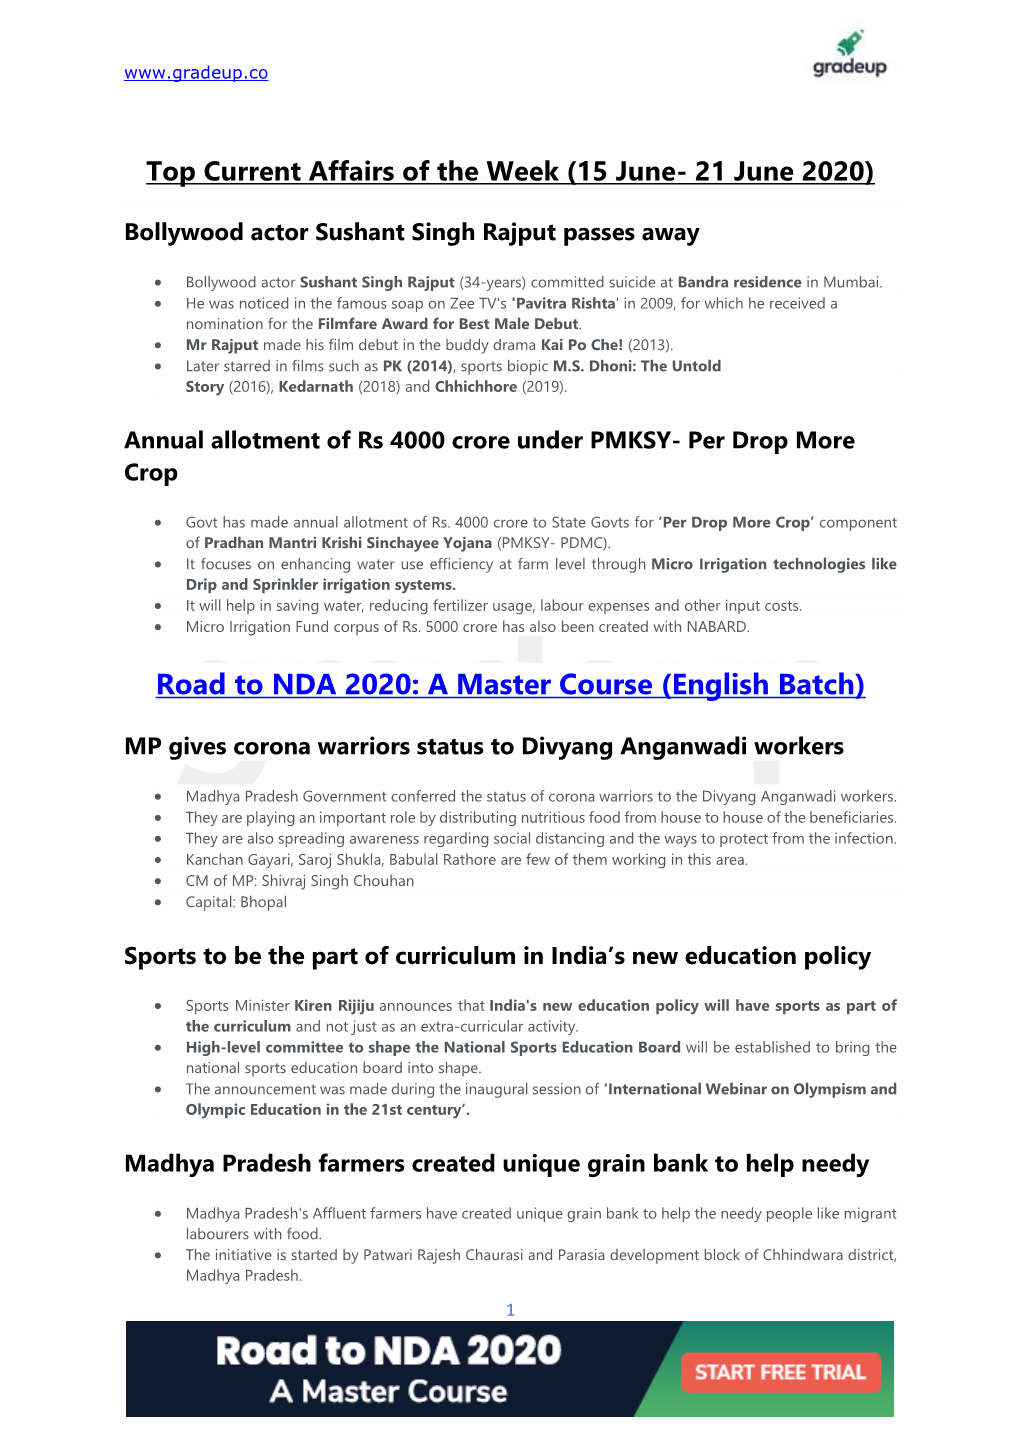 Road to NDA 2020: a Master Course (English Batch)